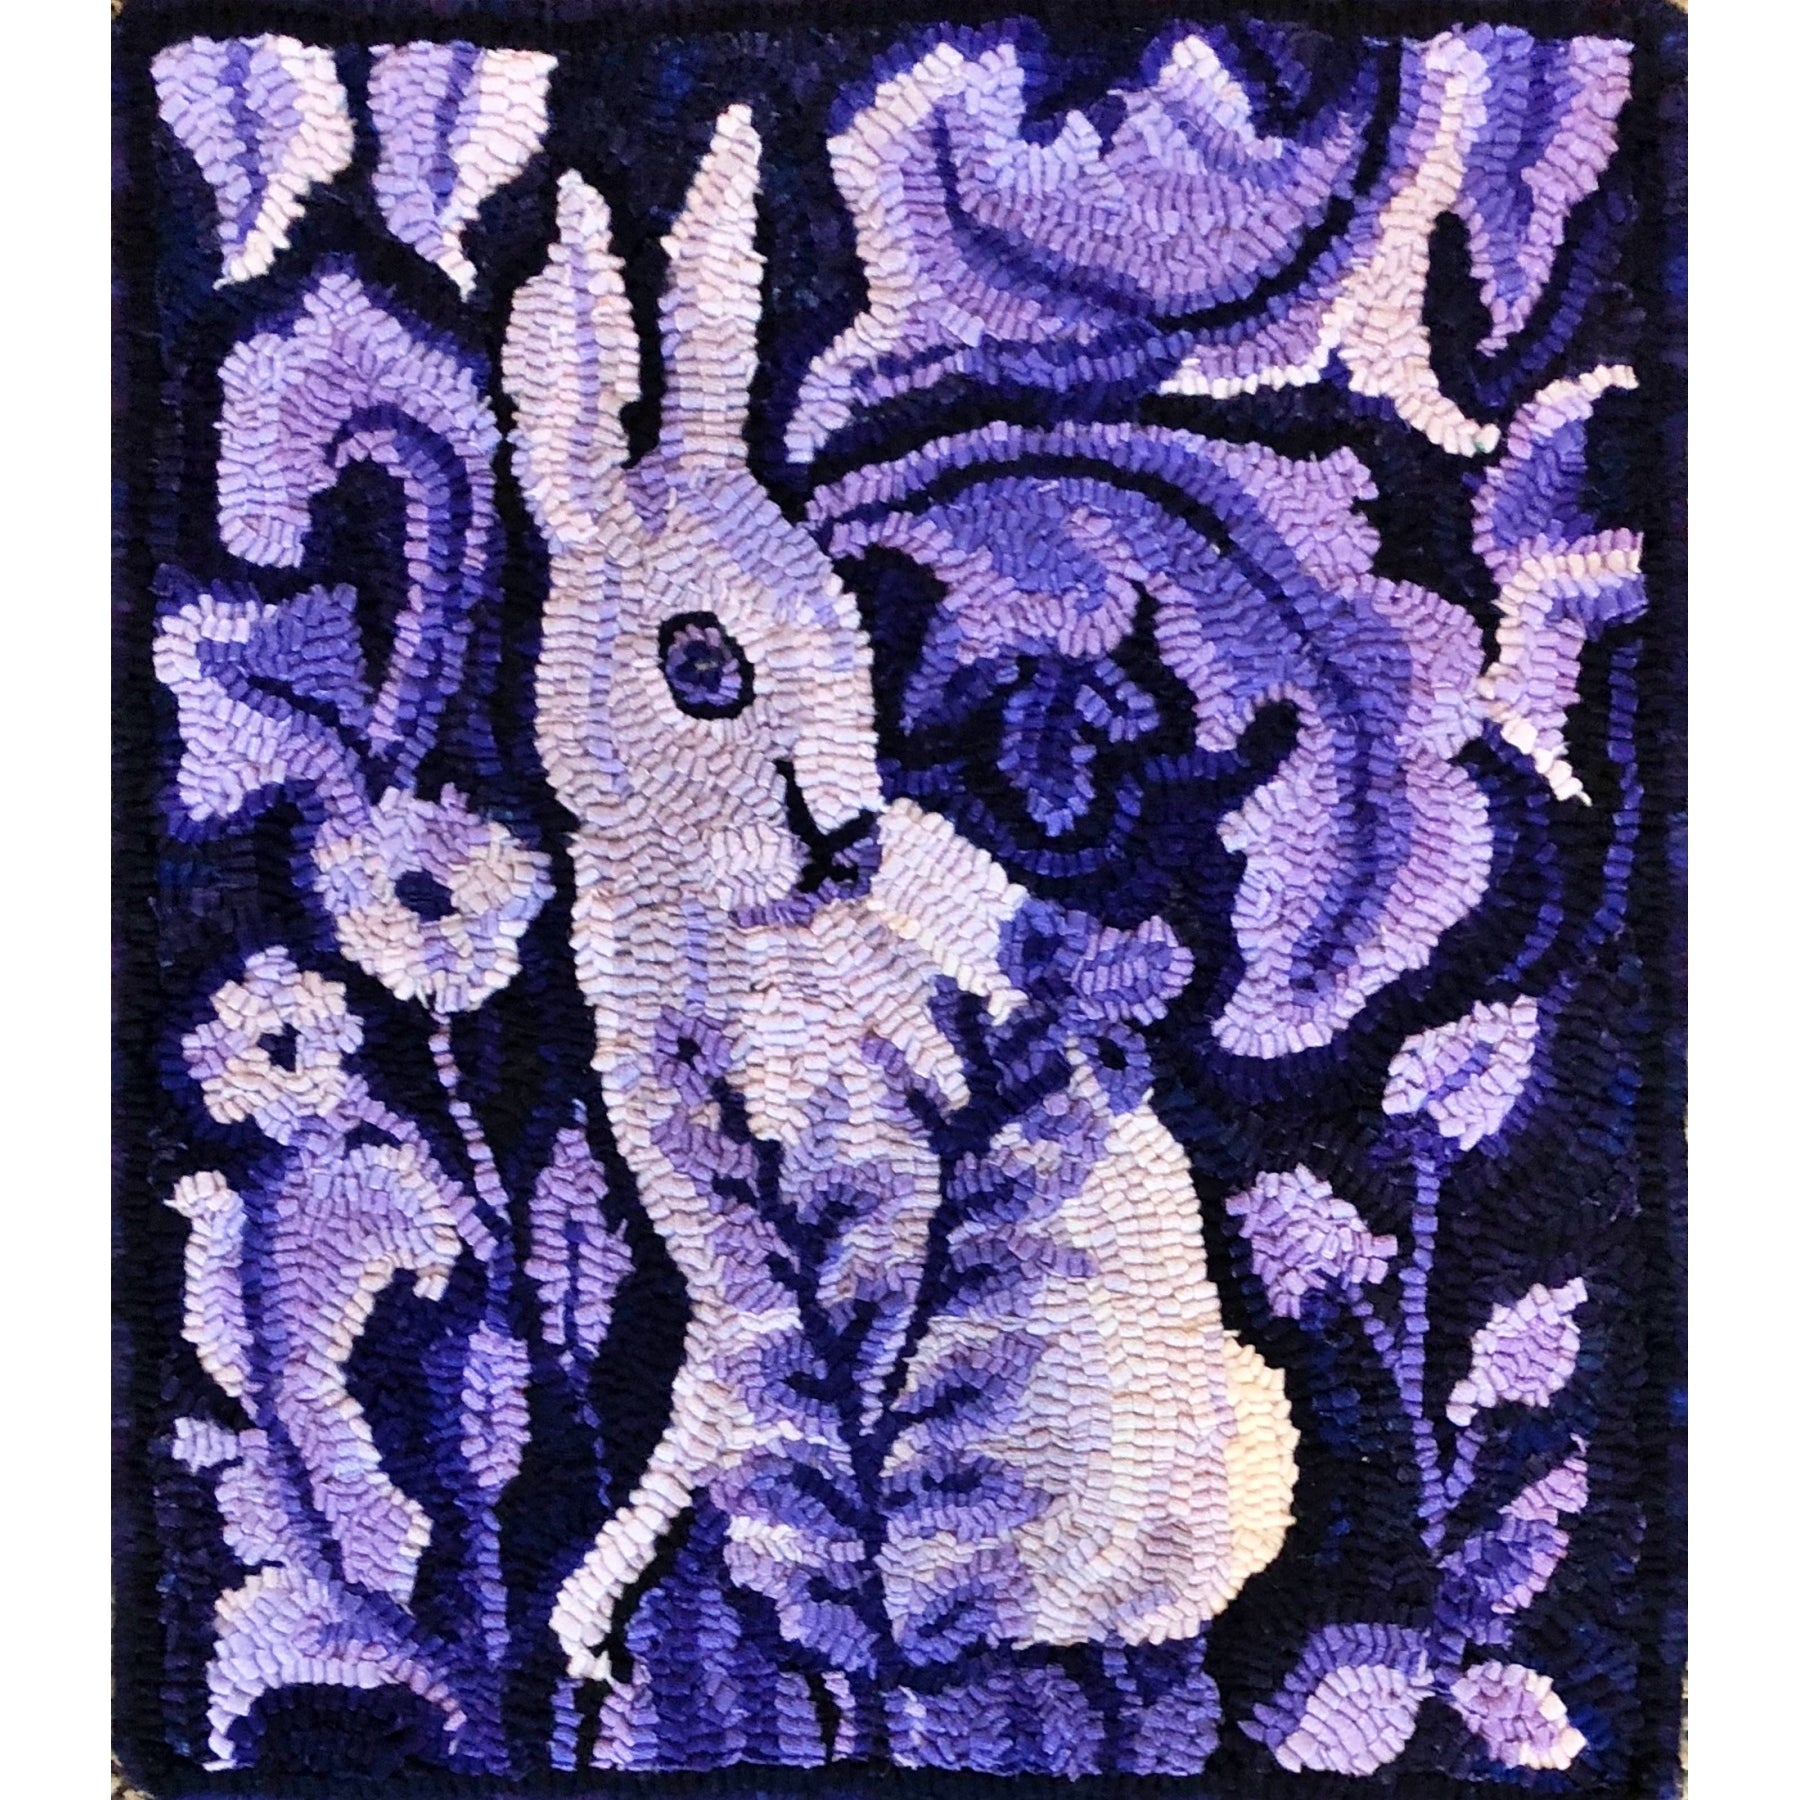 Morris Bunny, rug hooked by Betty Allen